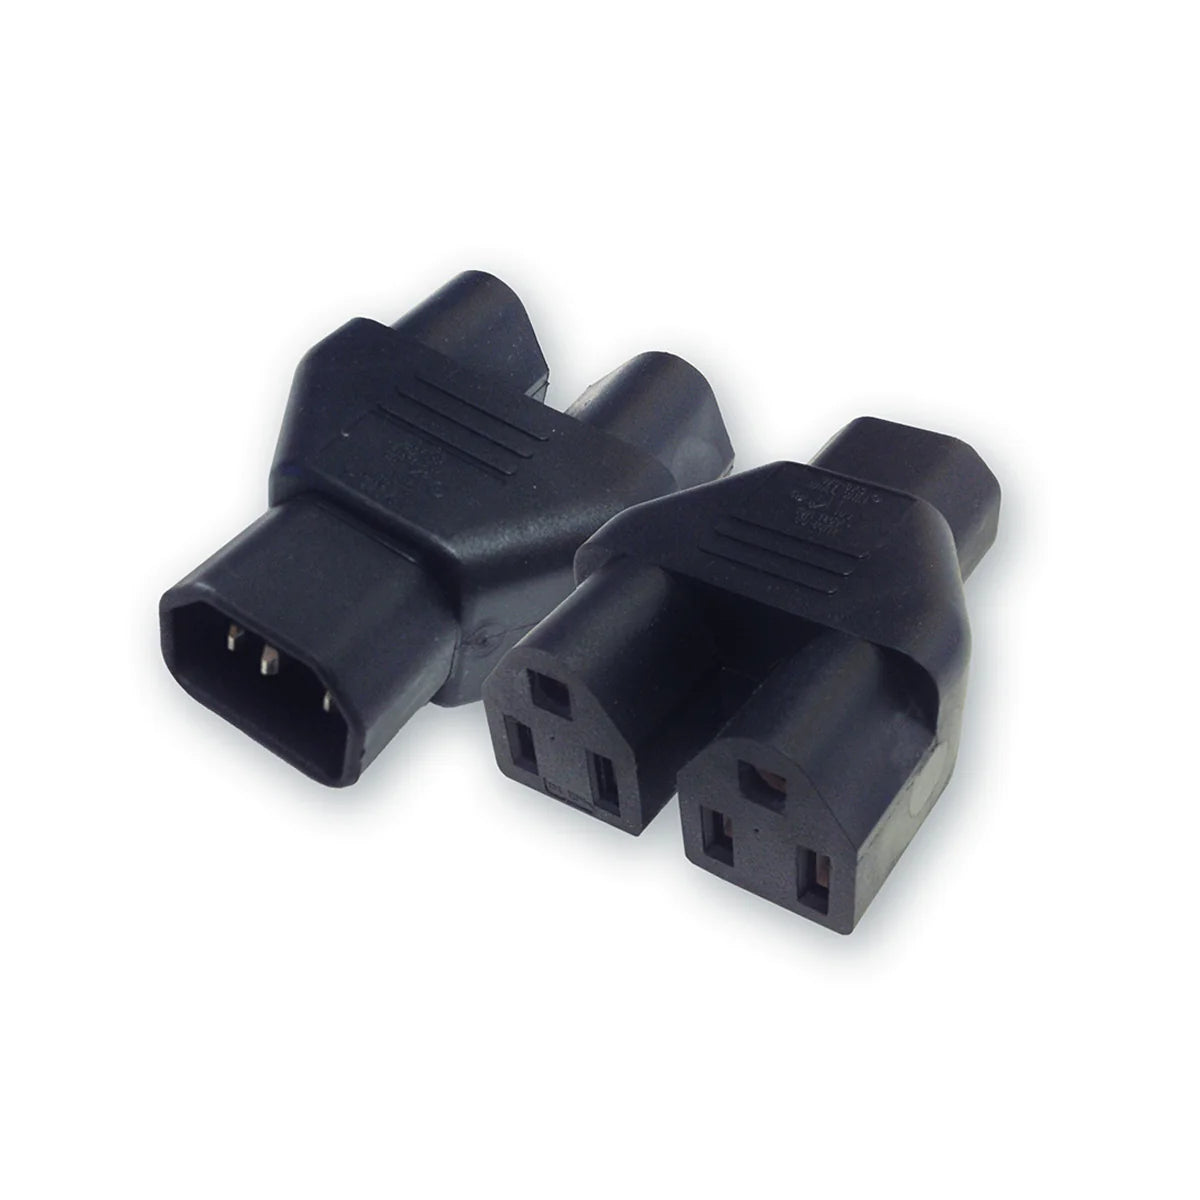 Wireworld IEC Dual Socket Power Cord Adapter